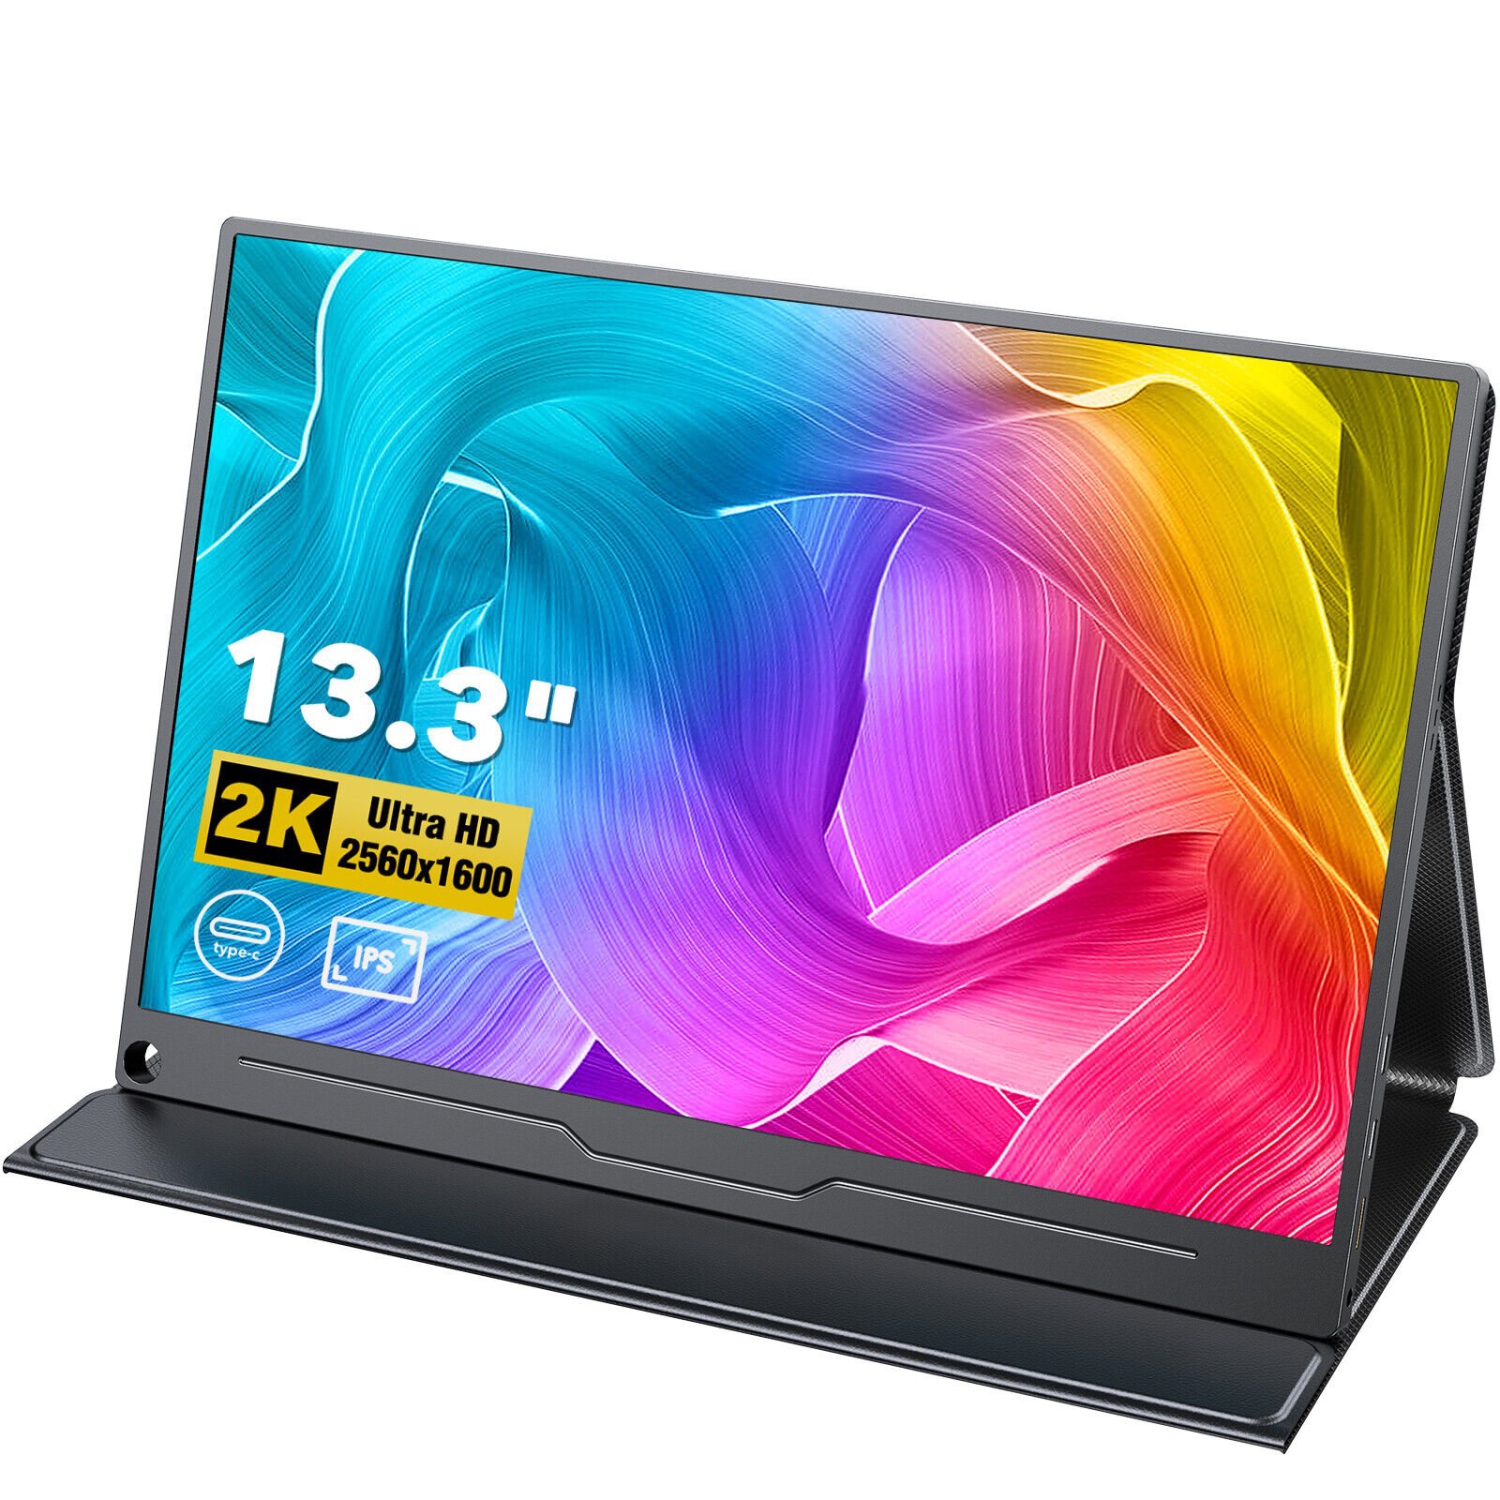 2K Portable Monitor 13.3" Laptop screen Extendor 100% sRGB Color Gamut Travel Monitor